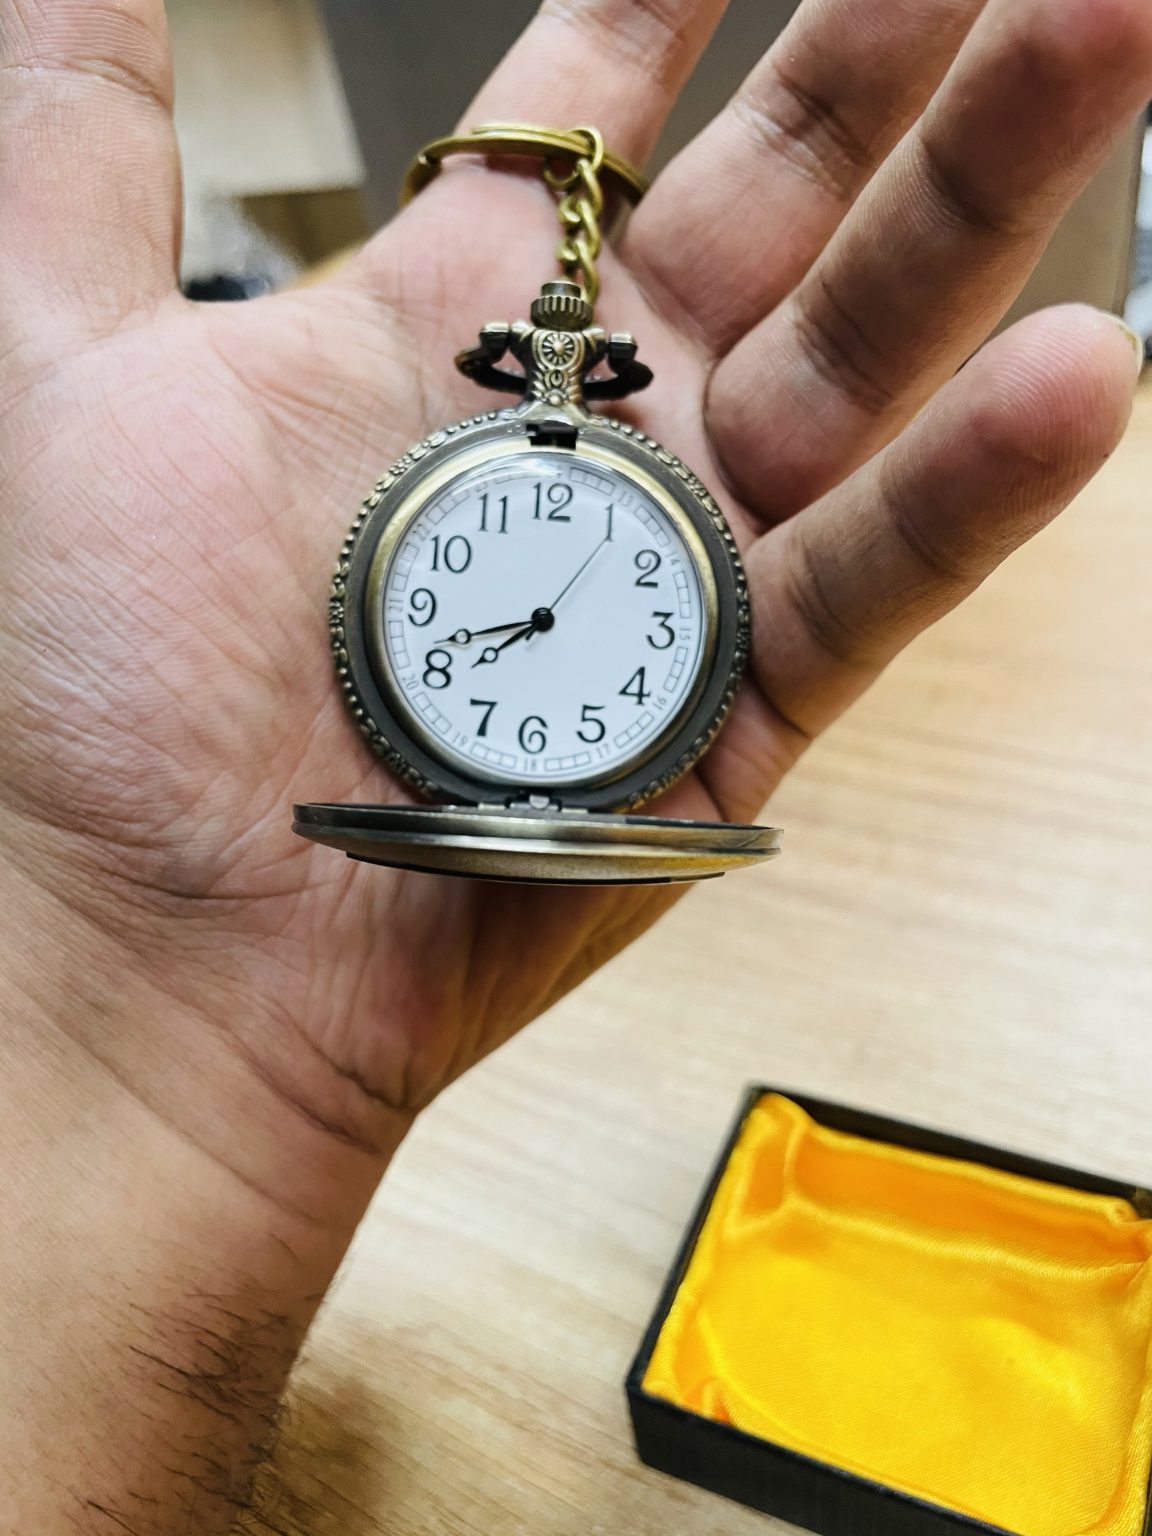 Buy ARTVARKO Pocket Gandhi Brass Watch Antique with Wooden Box Golden Roman  Numbers Dial for Men and Women Gift at Amazon.in